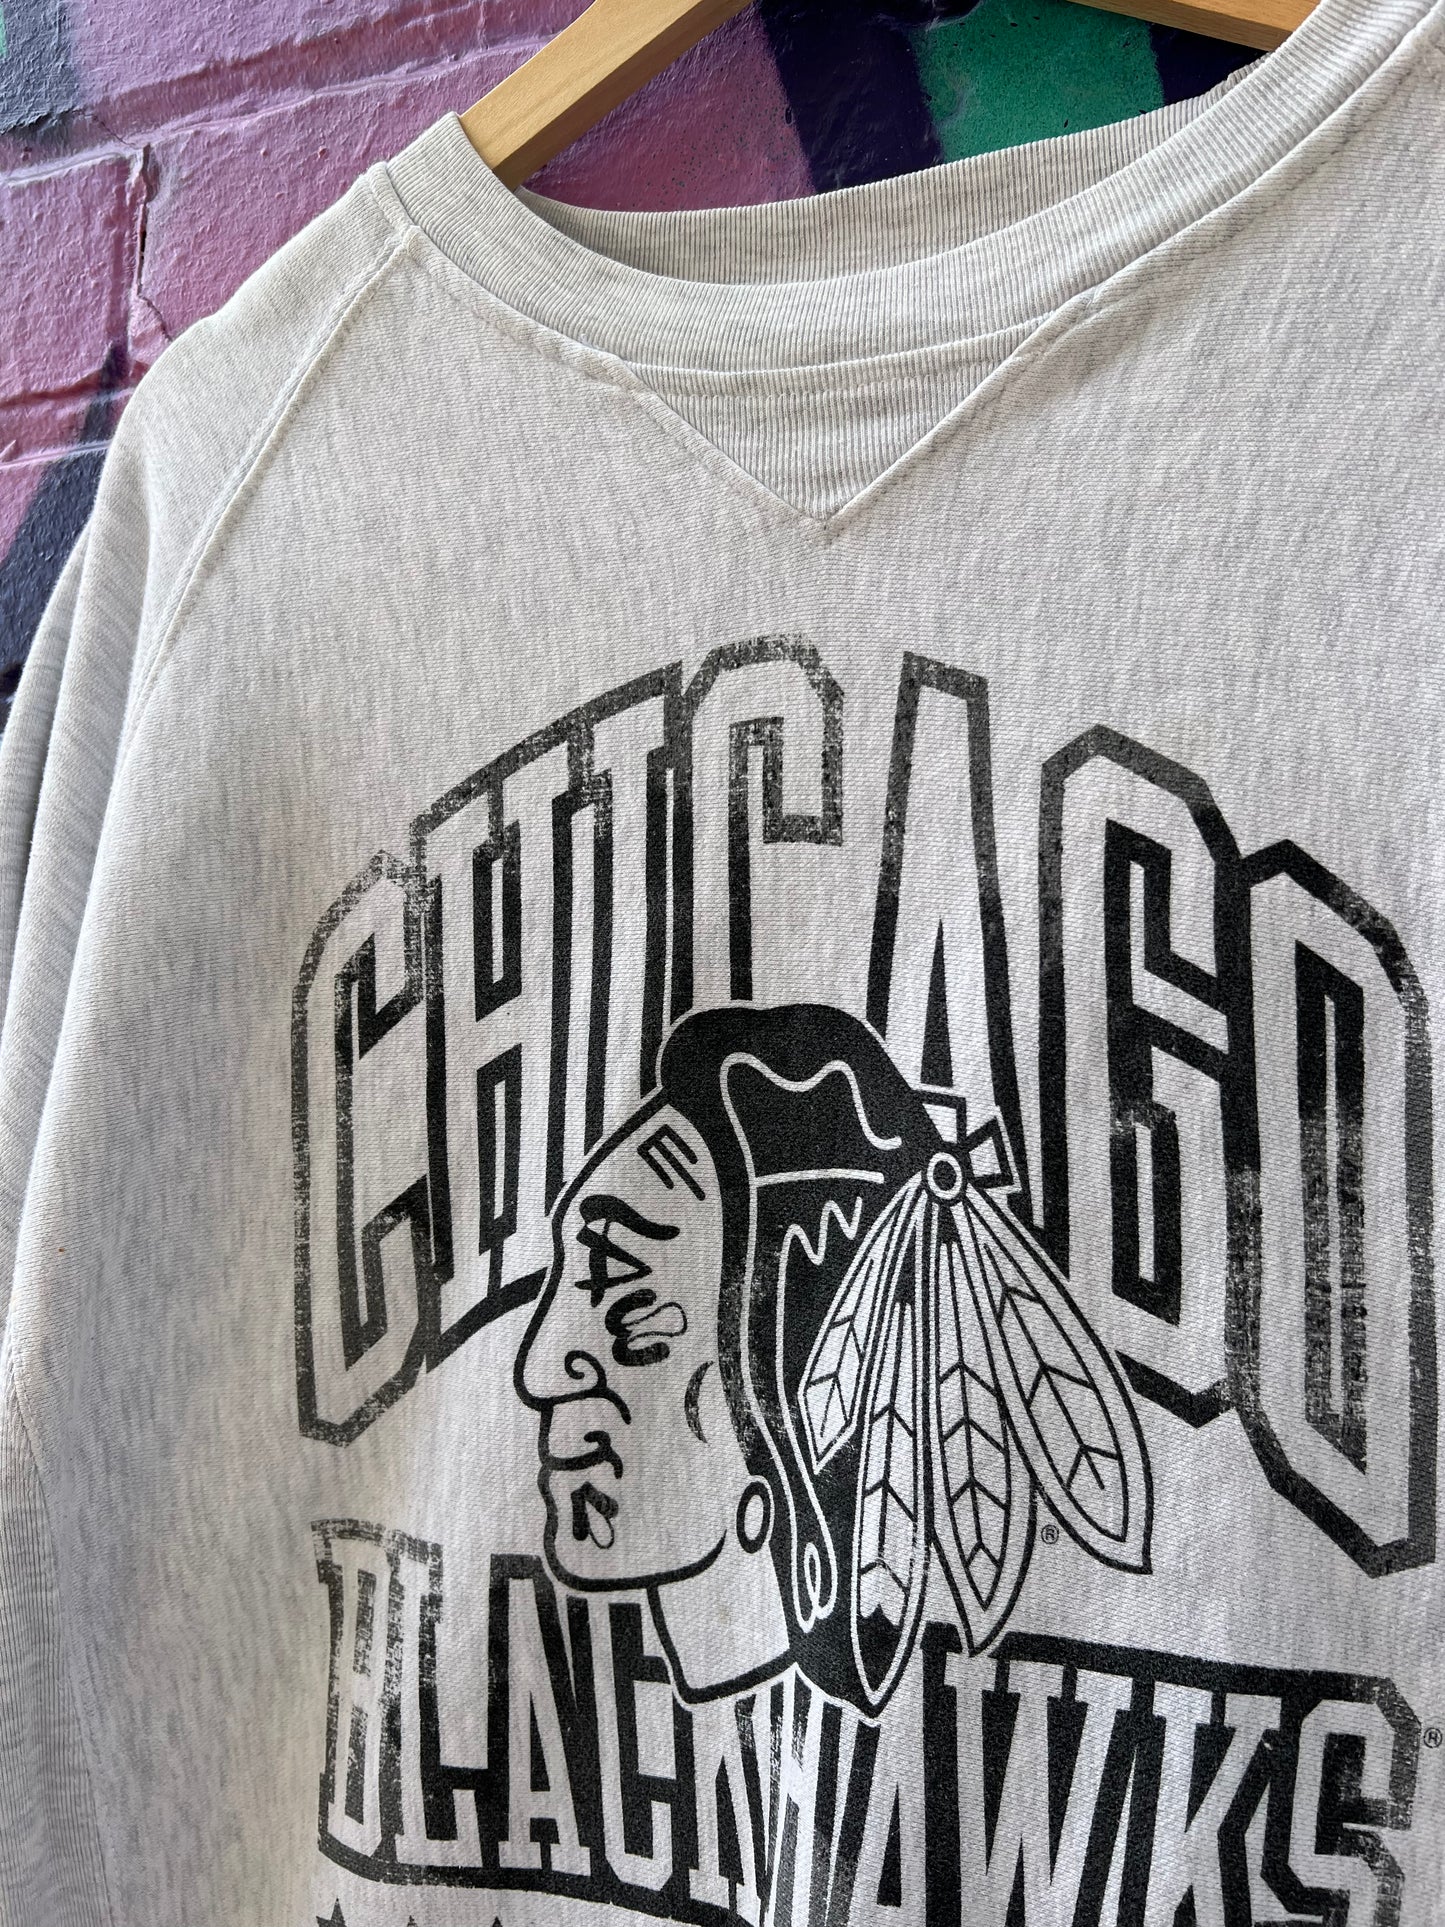 XL - Vintage Chicago Blackhawks